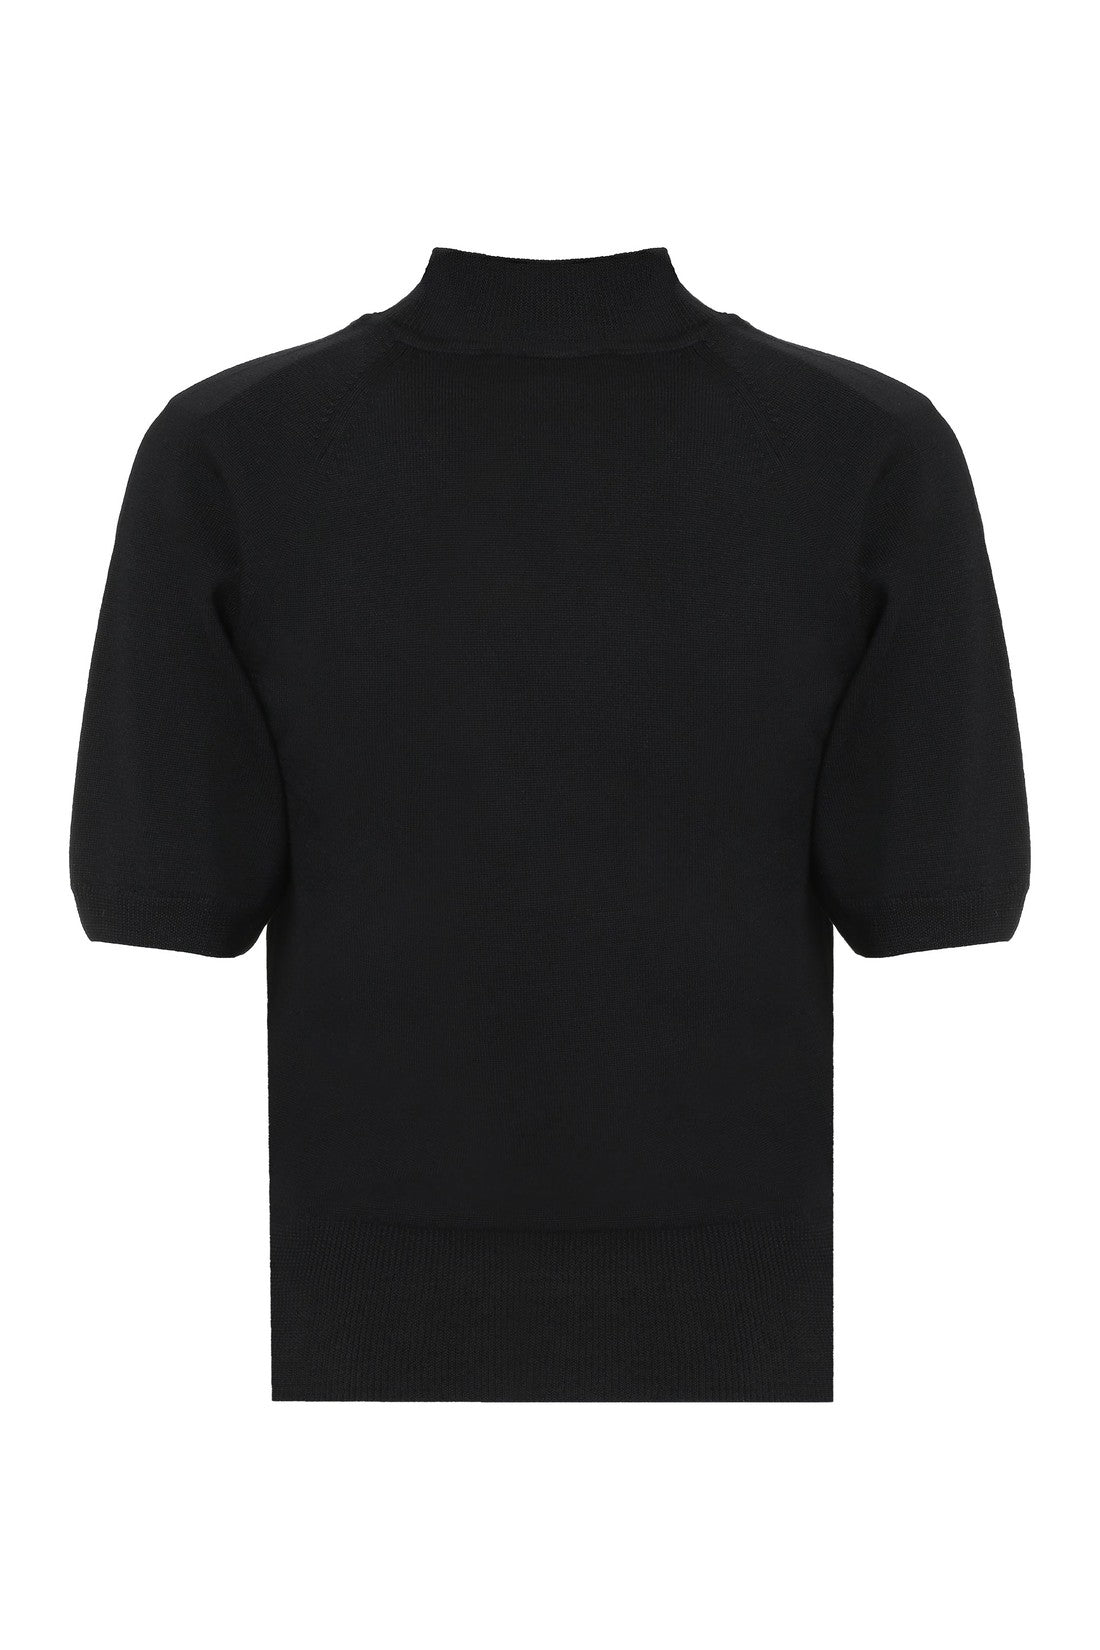 Vivienne Westwood-OUTLET-SALE-Bea Logo knitted t-shirt-ARCHIVIST